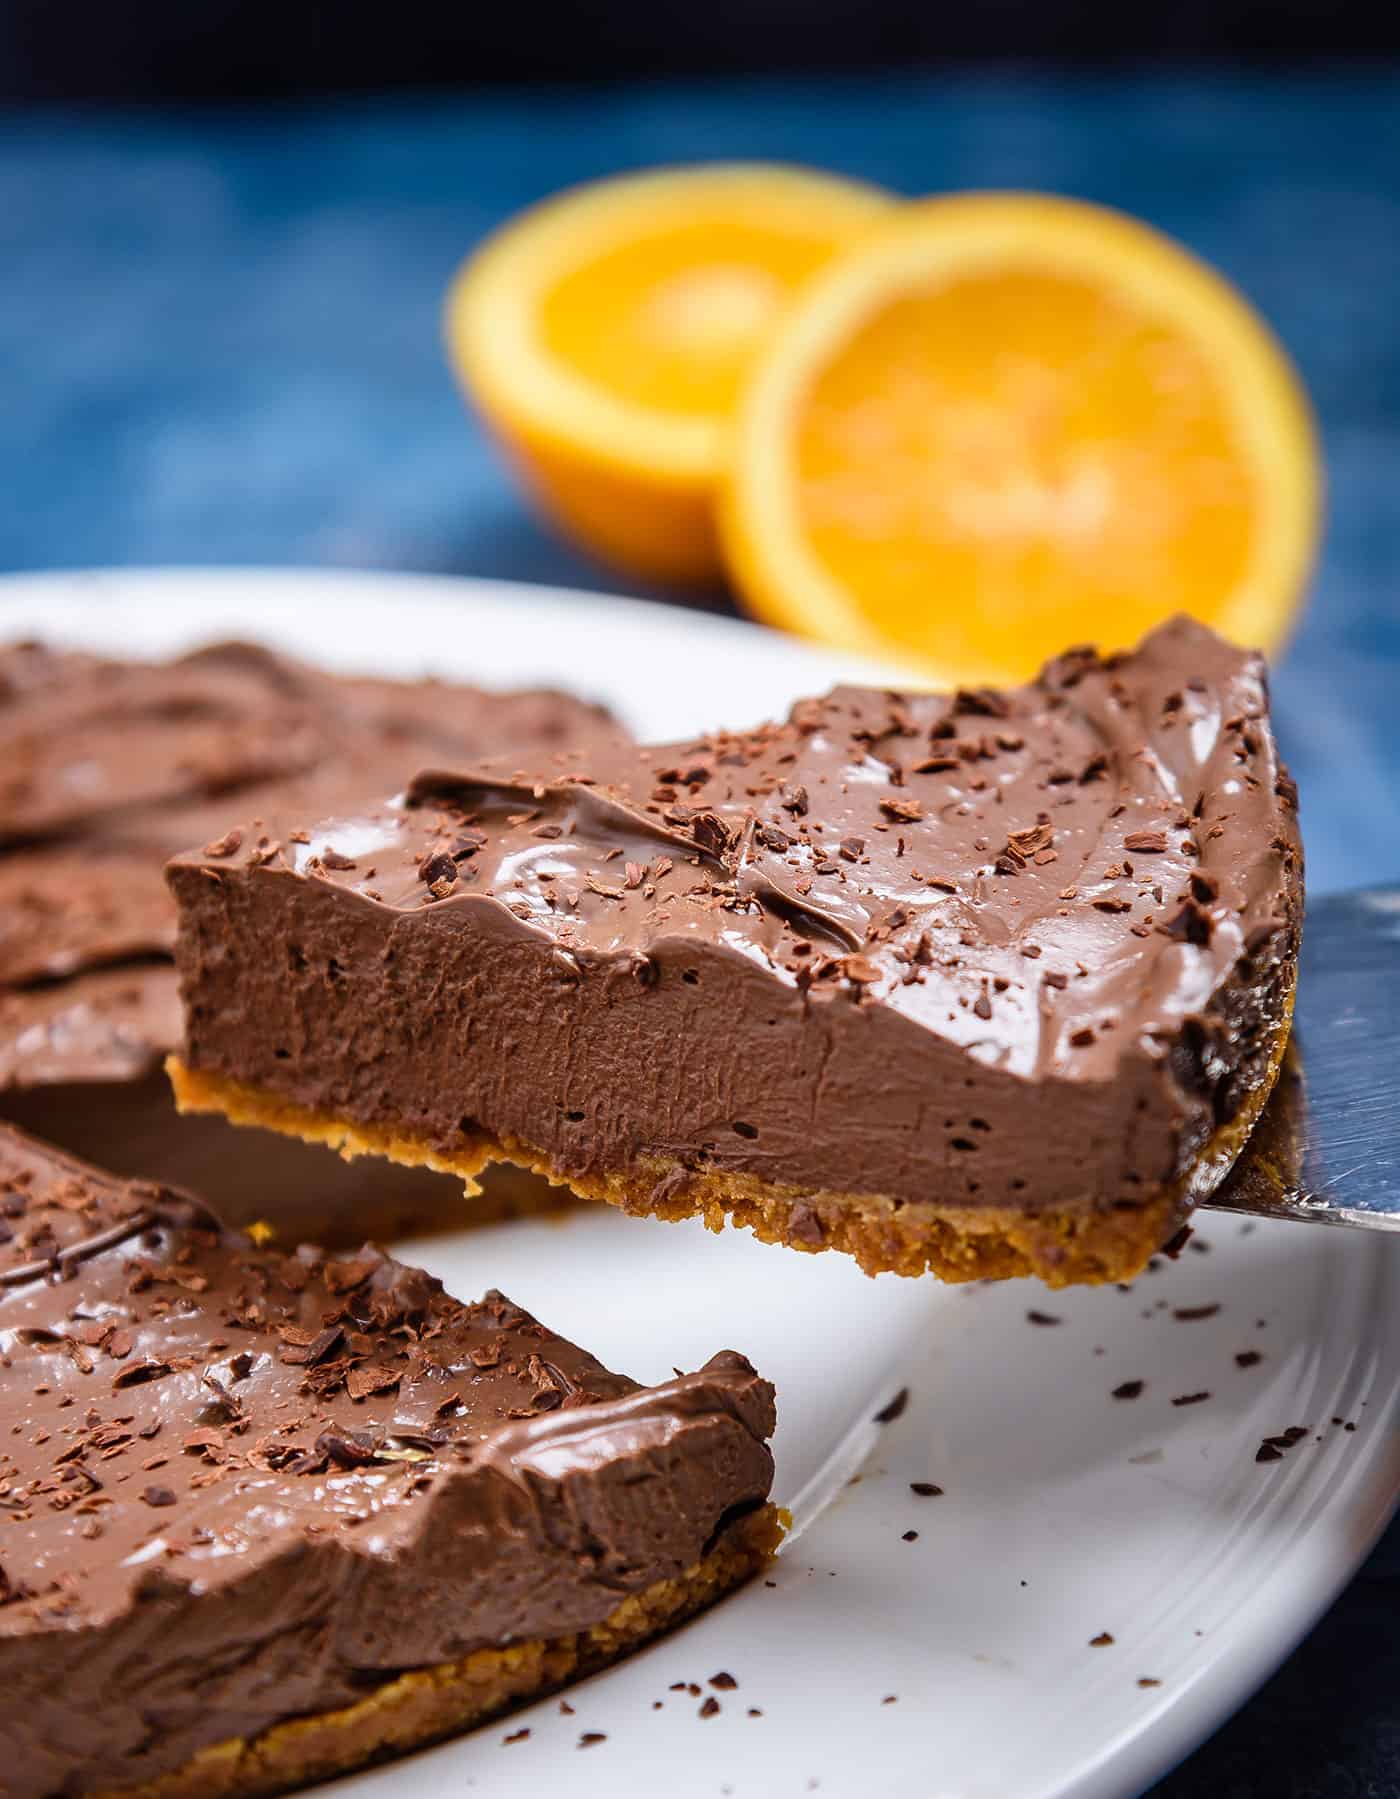 Best Ever Vegan Chocolate Orange Tart, so Decadent! - Especially Vegan